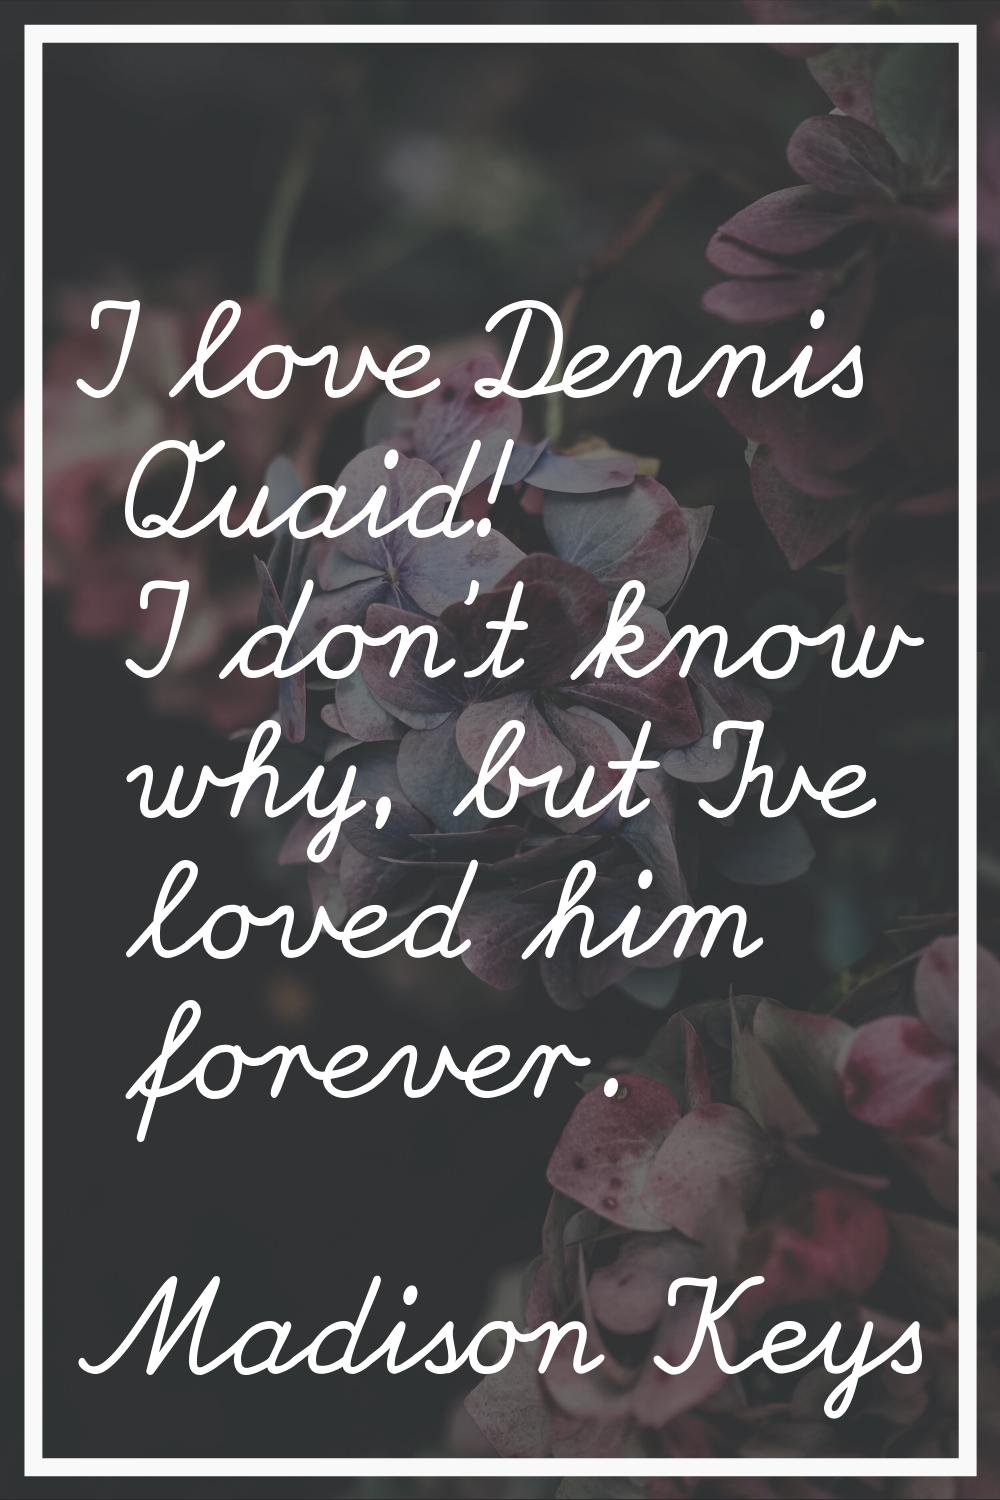 I love Dennis Quaid! I don't know why, but I've loved him forever.